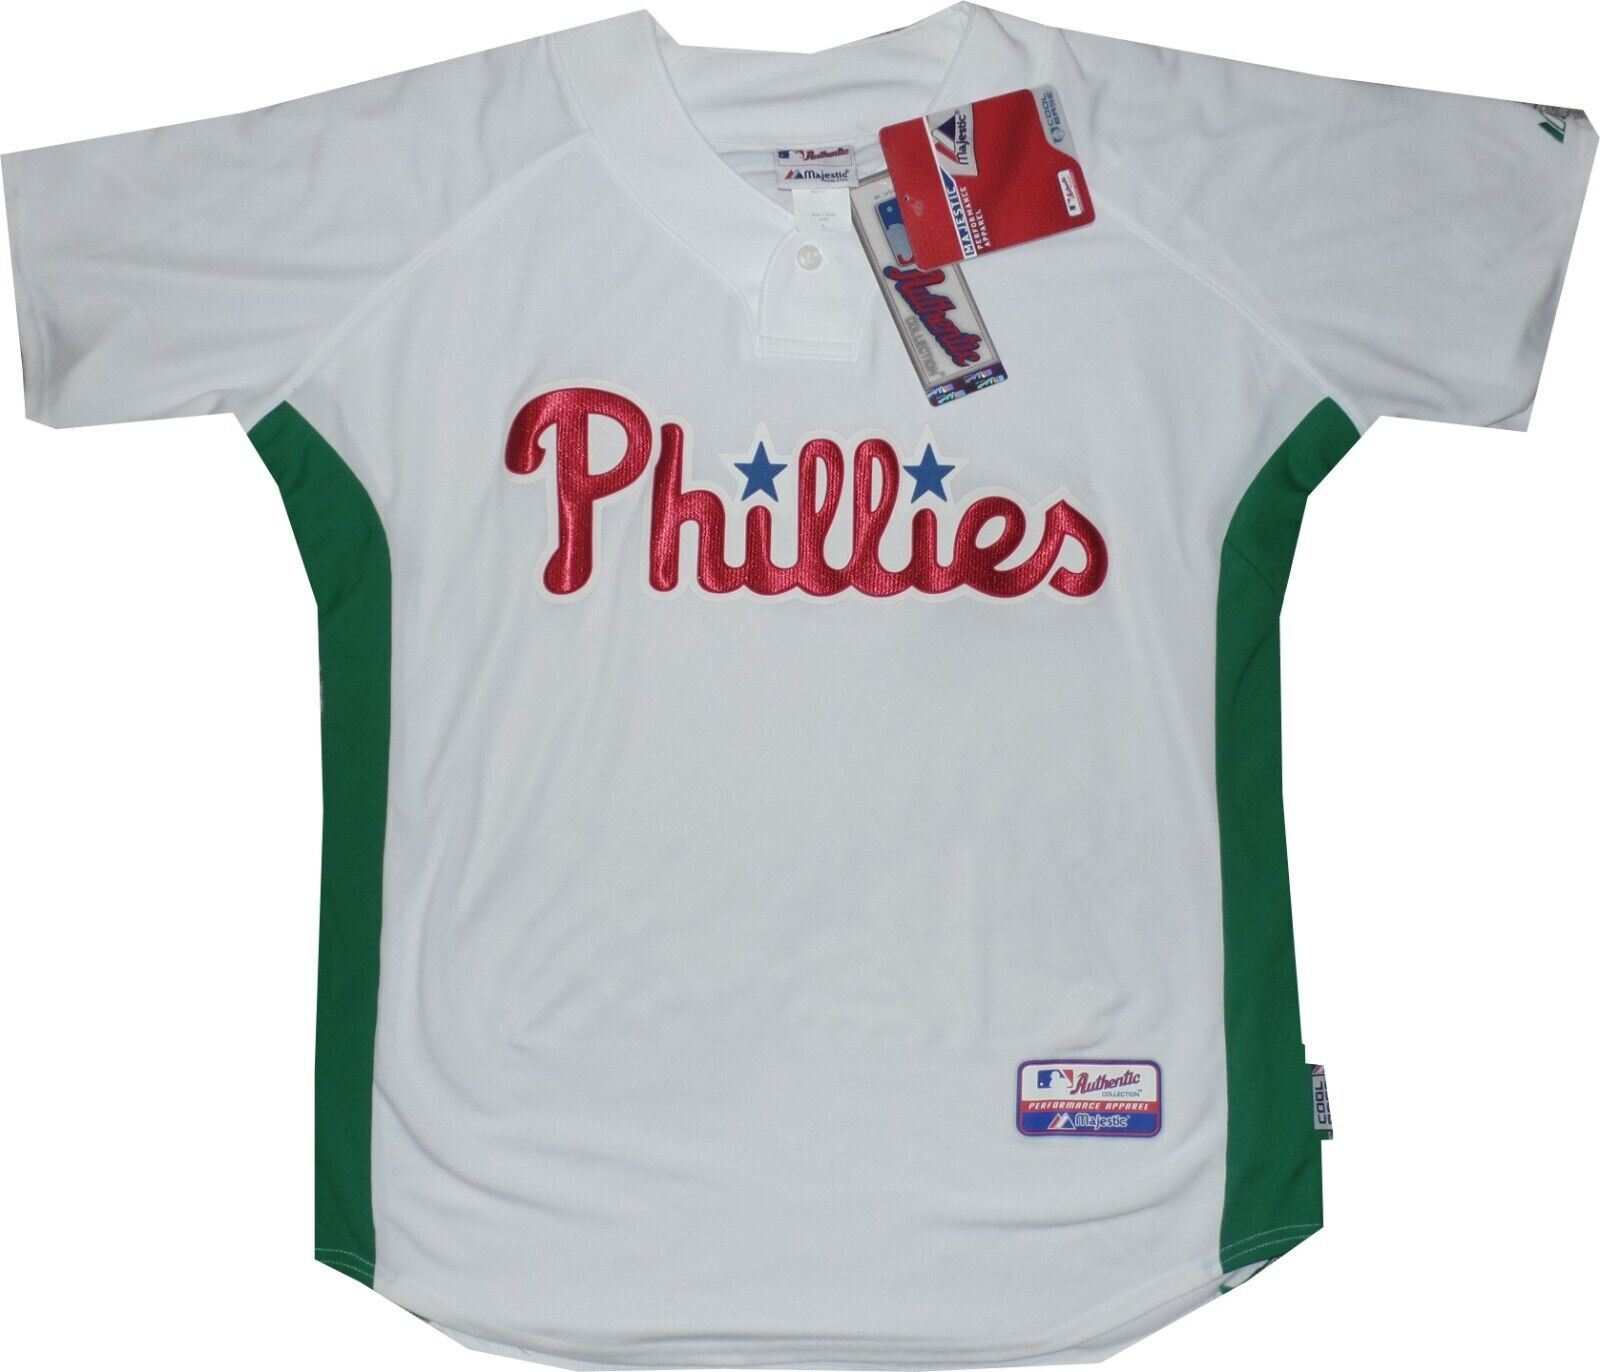 philadelphia phillies green jersey